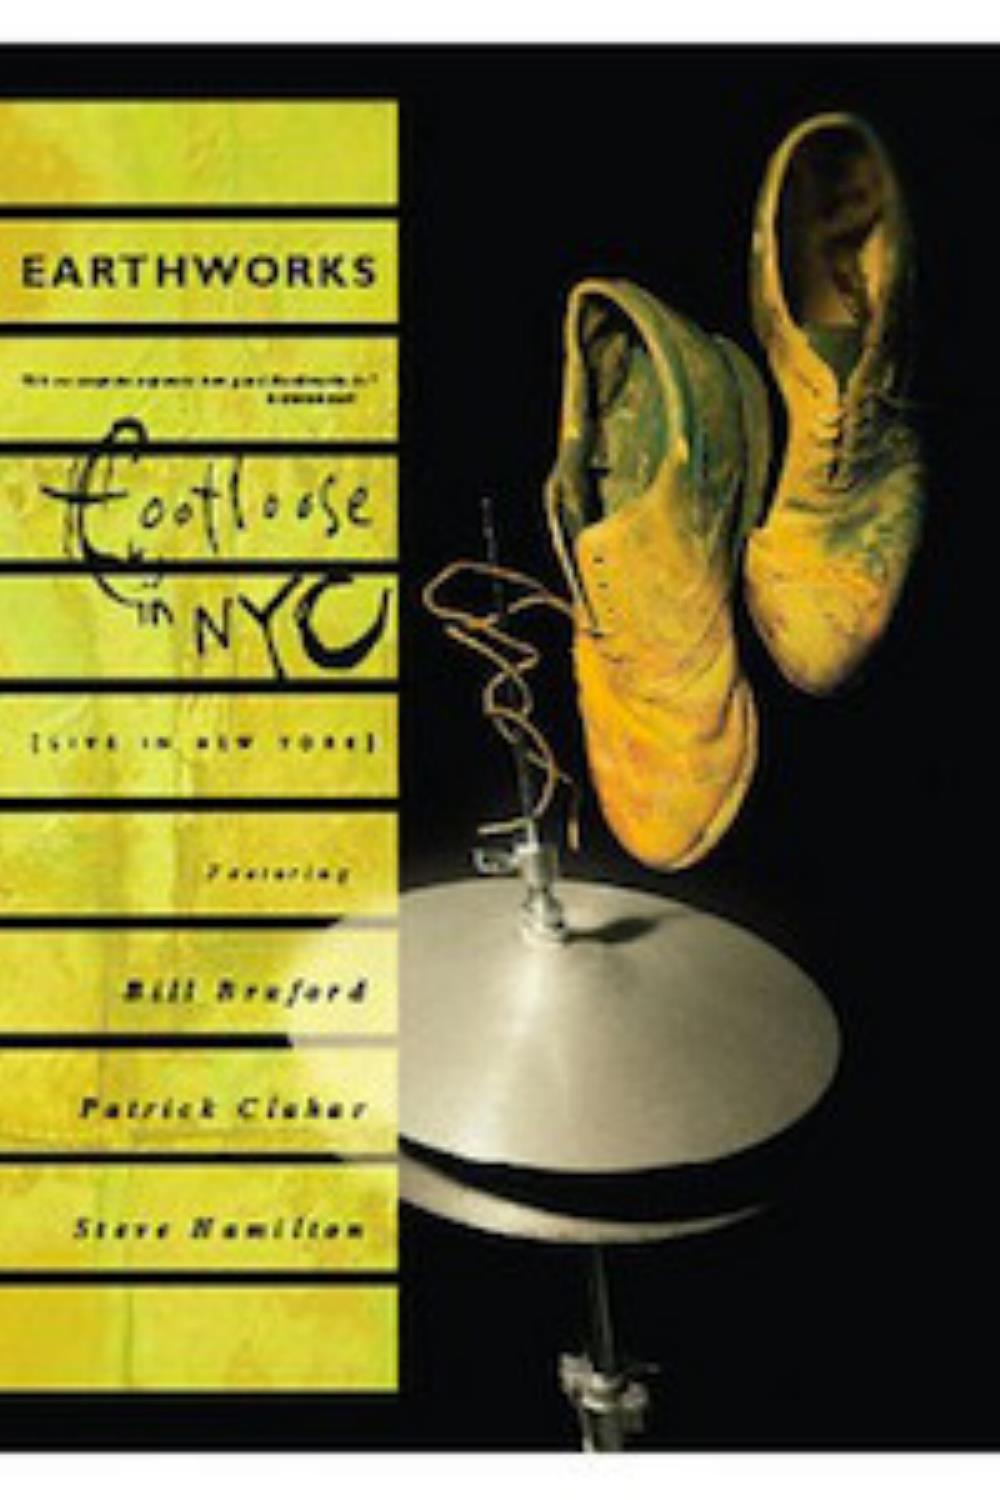 Bill Bruford's Earthworks Footloose in NYC album cover